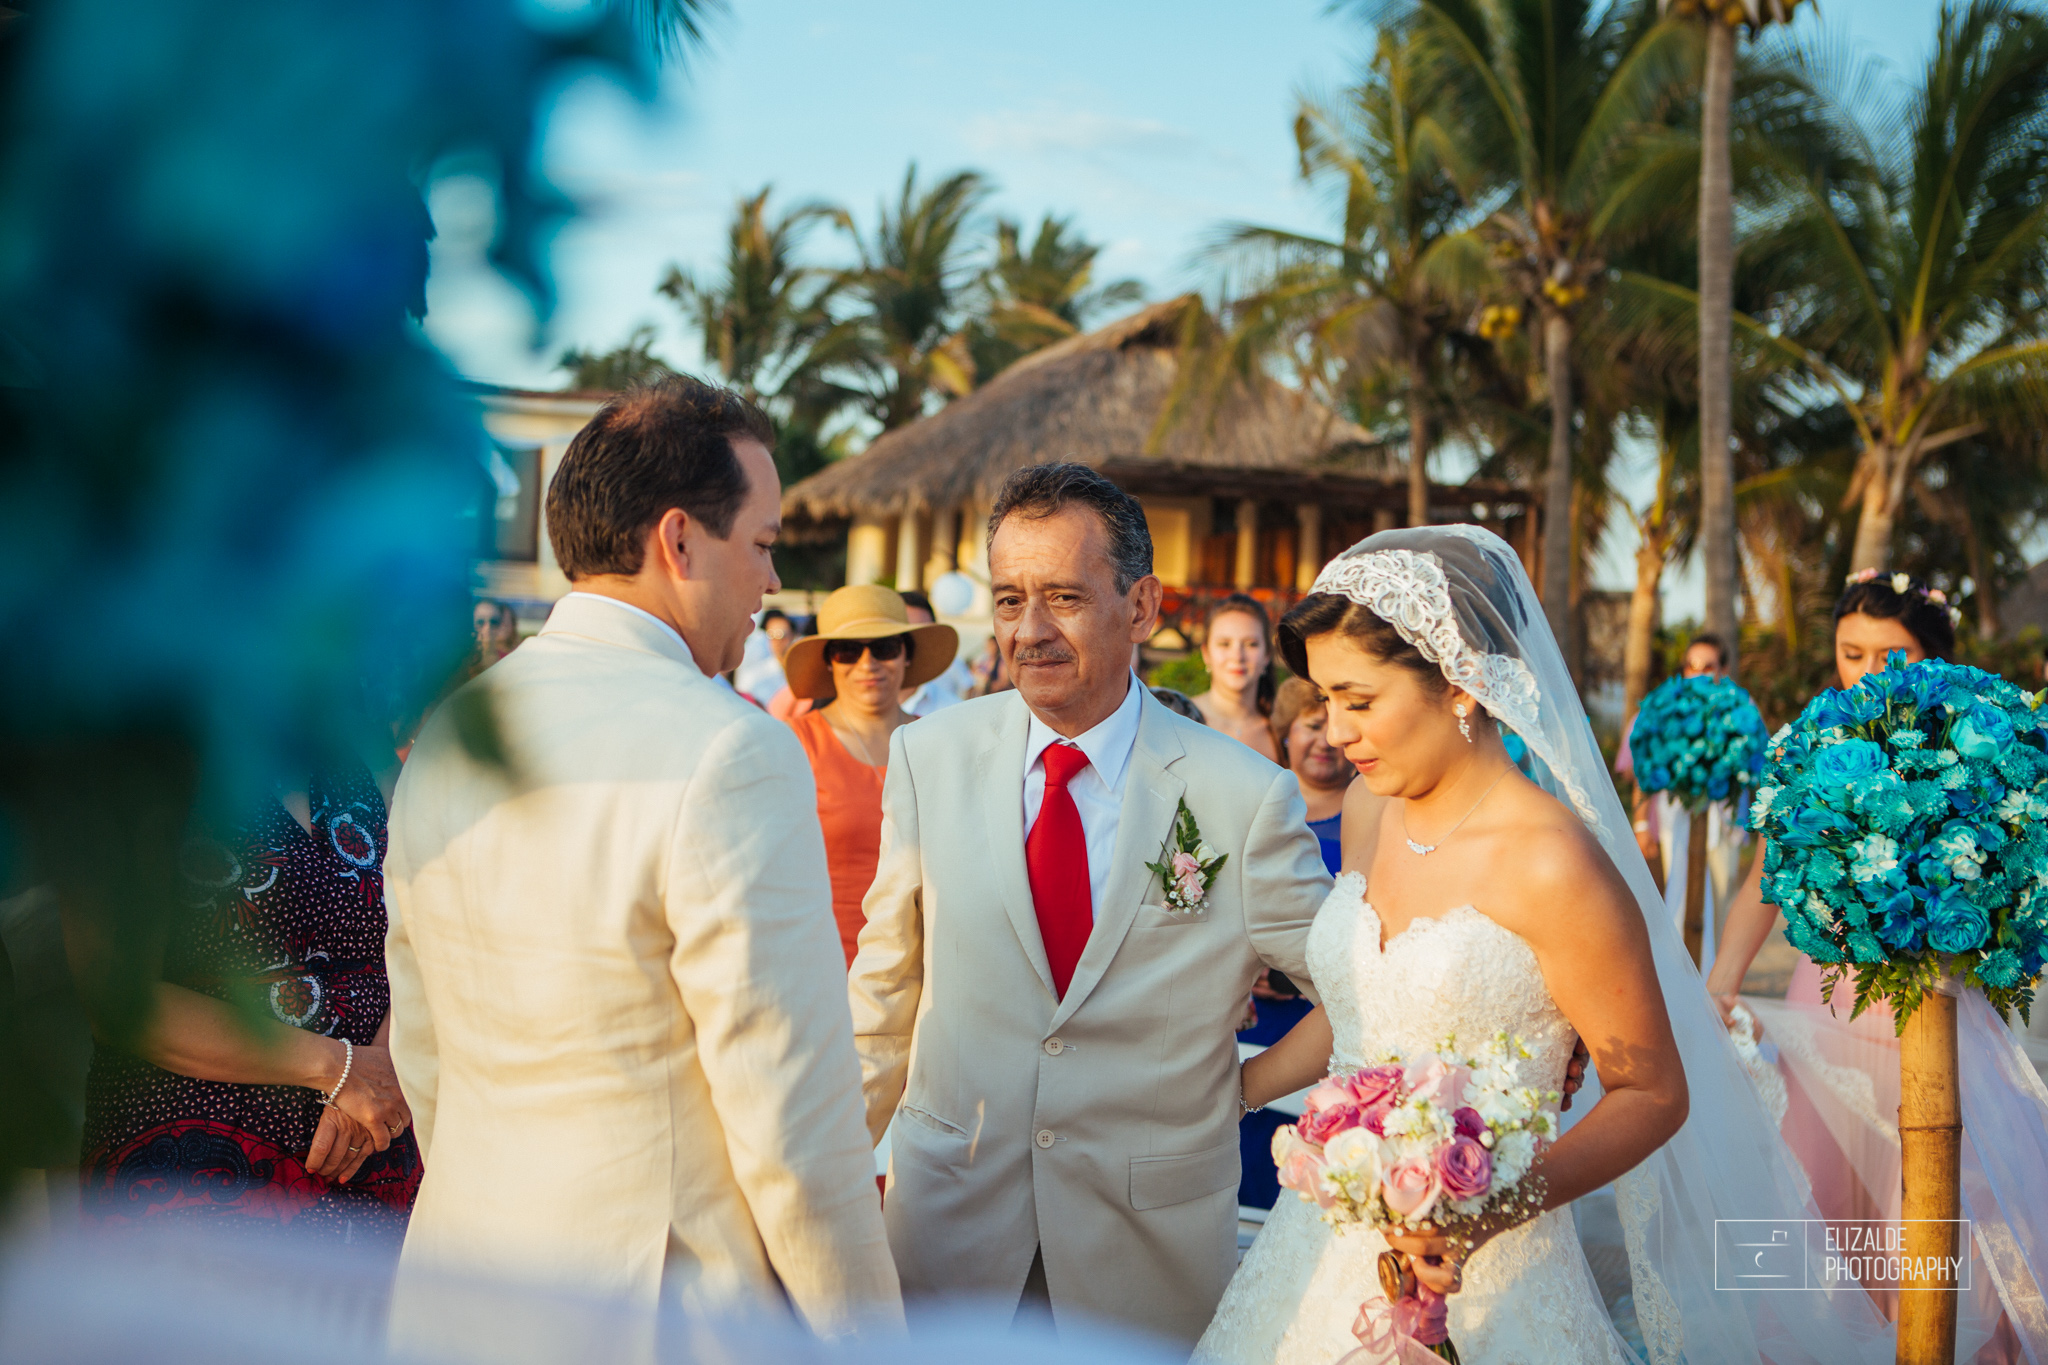 Pay and Ferran_Acapulco_Destination Wedding_Elizalde Photography-82.jpg